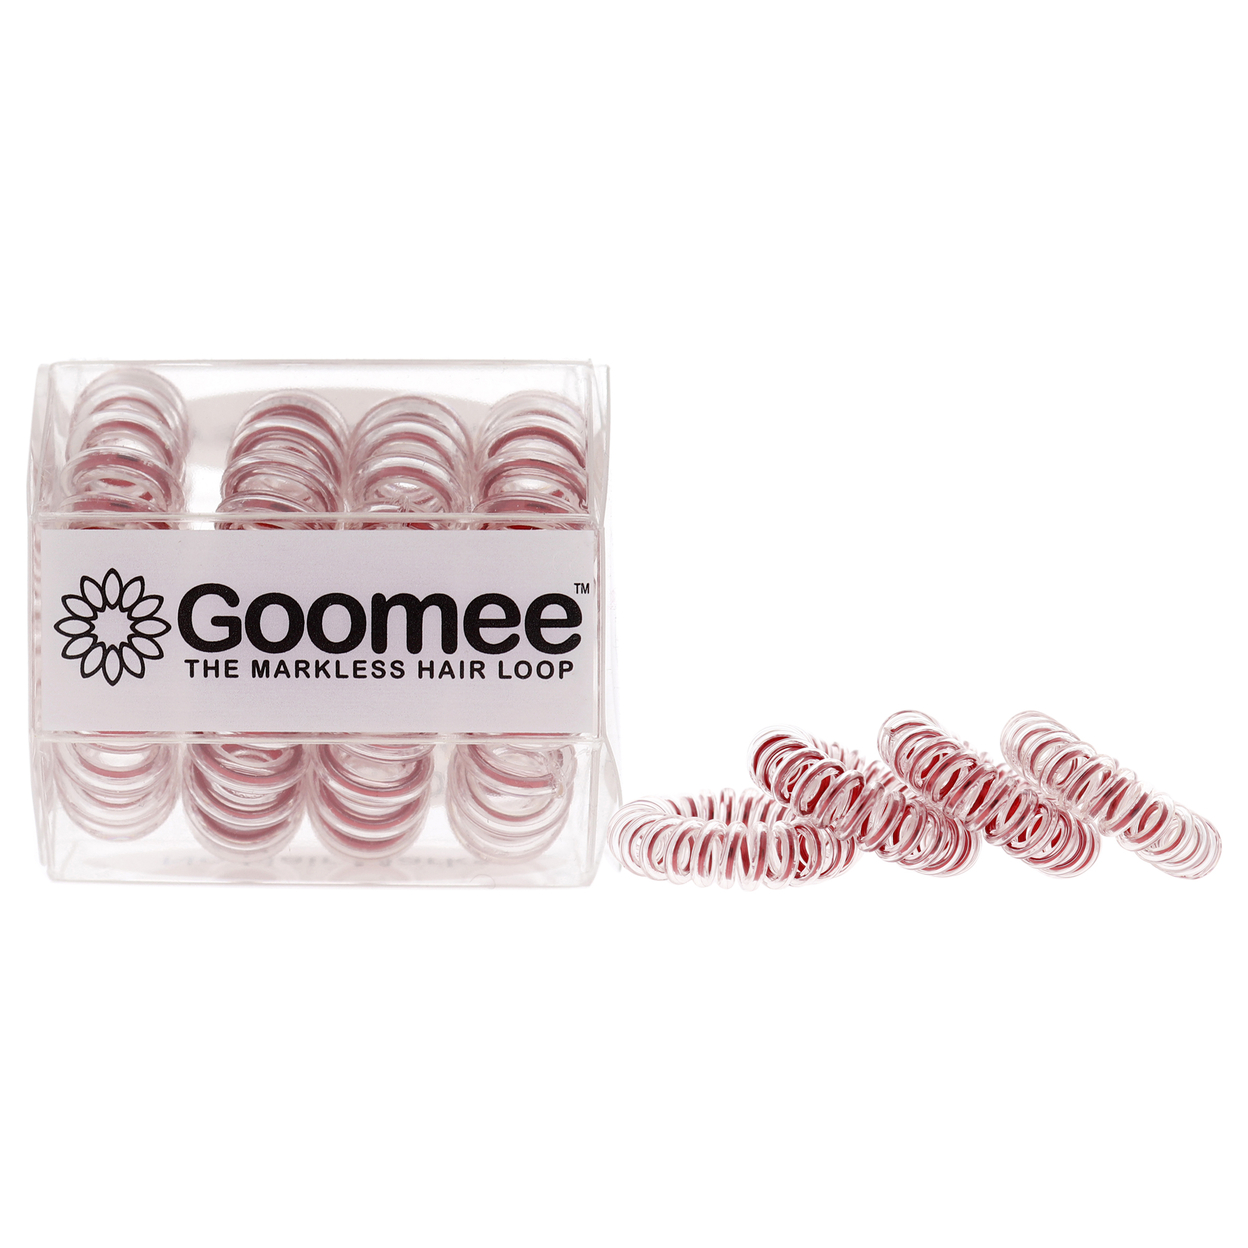 Goomee The Markless Hair Loop Set - Stocking Stuffe Hair Tie 4 Pc